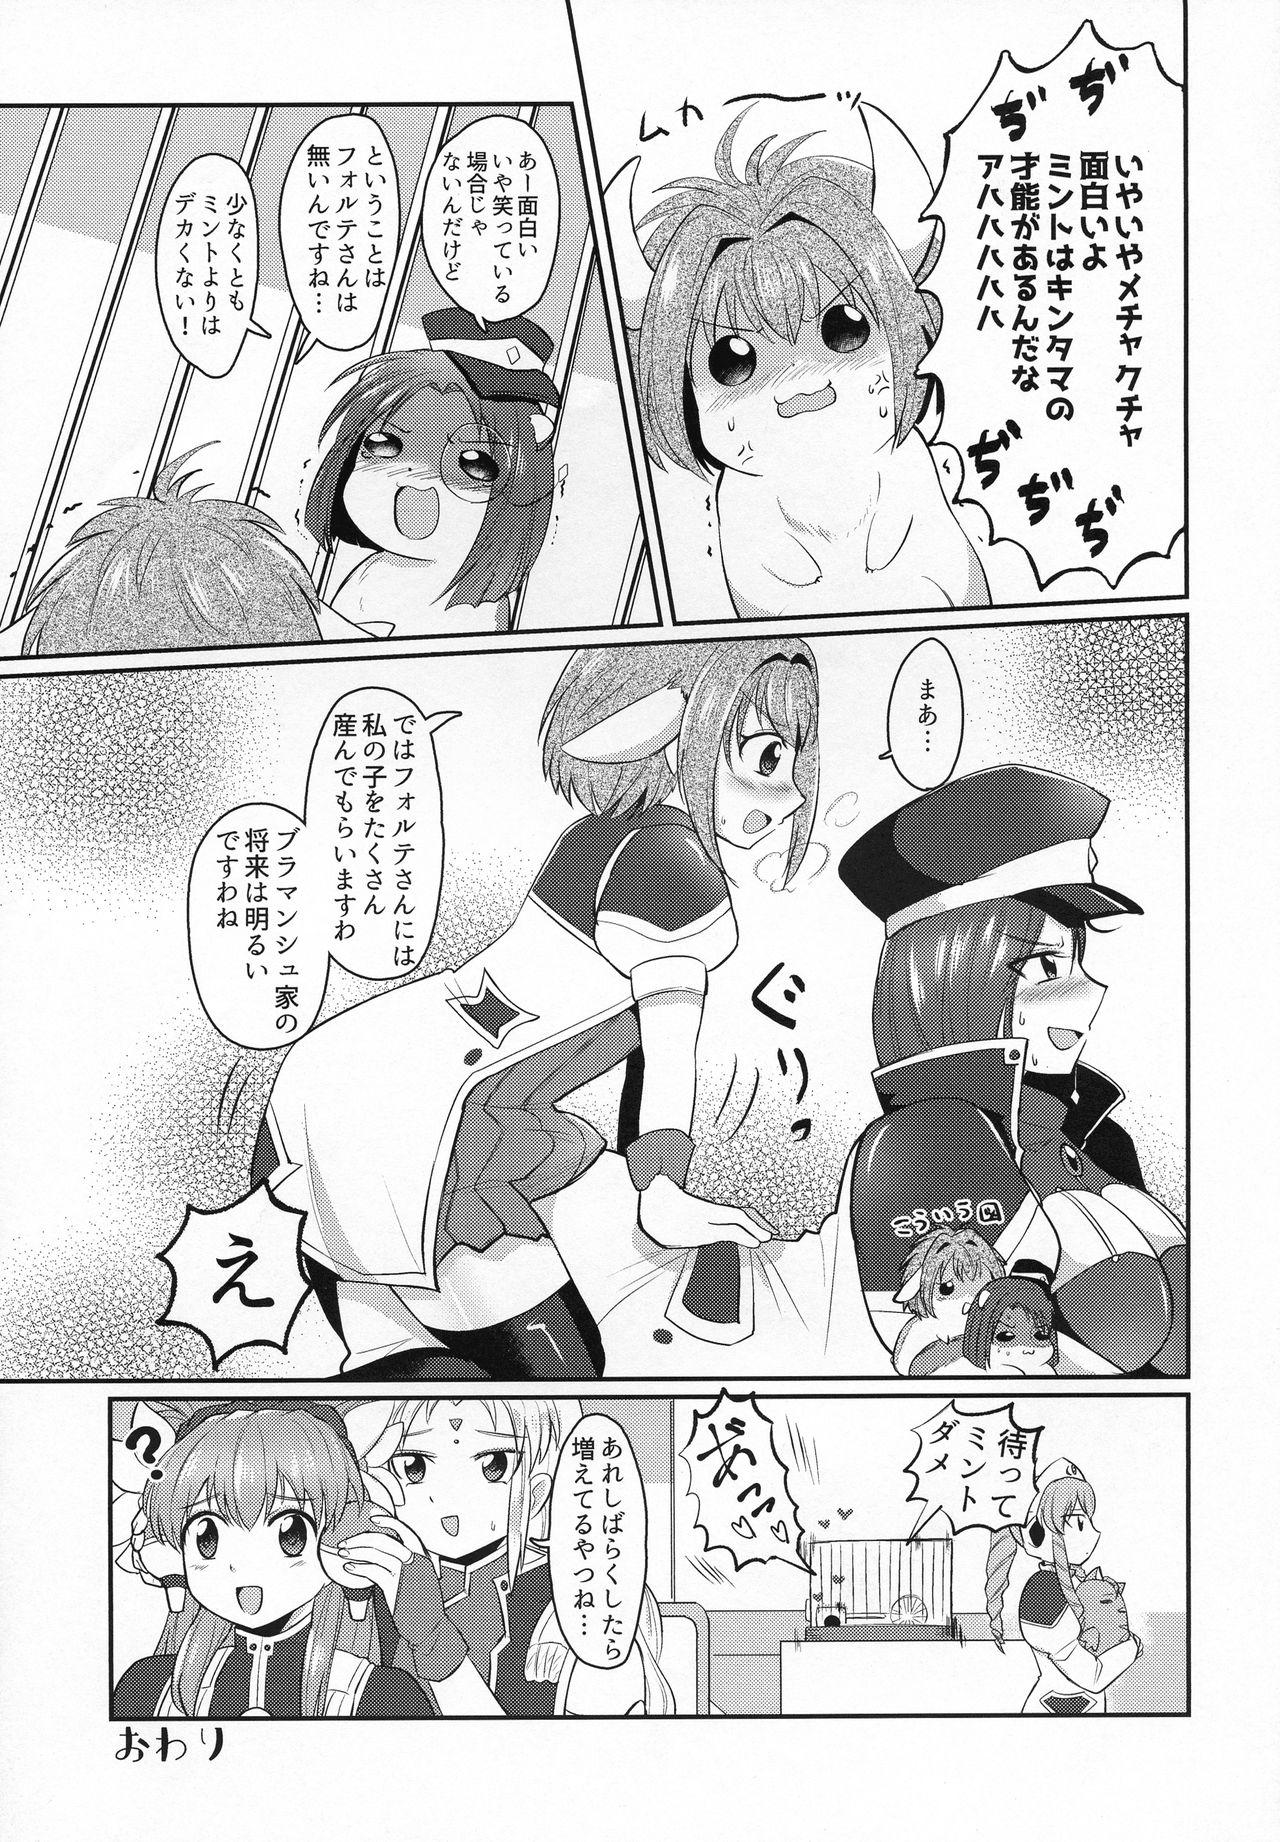 Boobies Forte-san!! Sukida 〜〜〜!!! - Galaxy angel Culos - Page 7